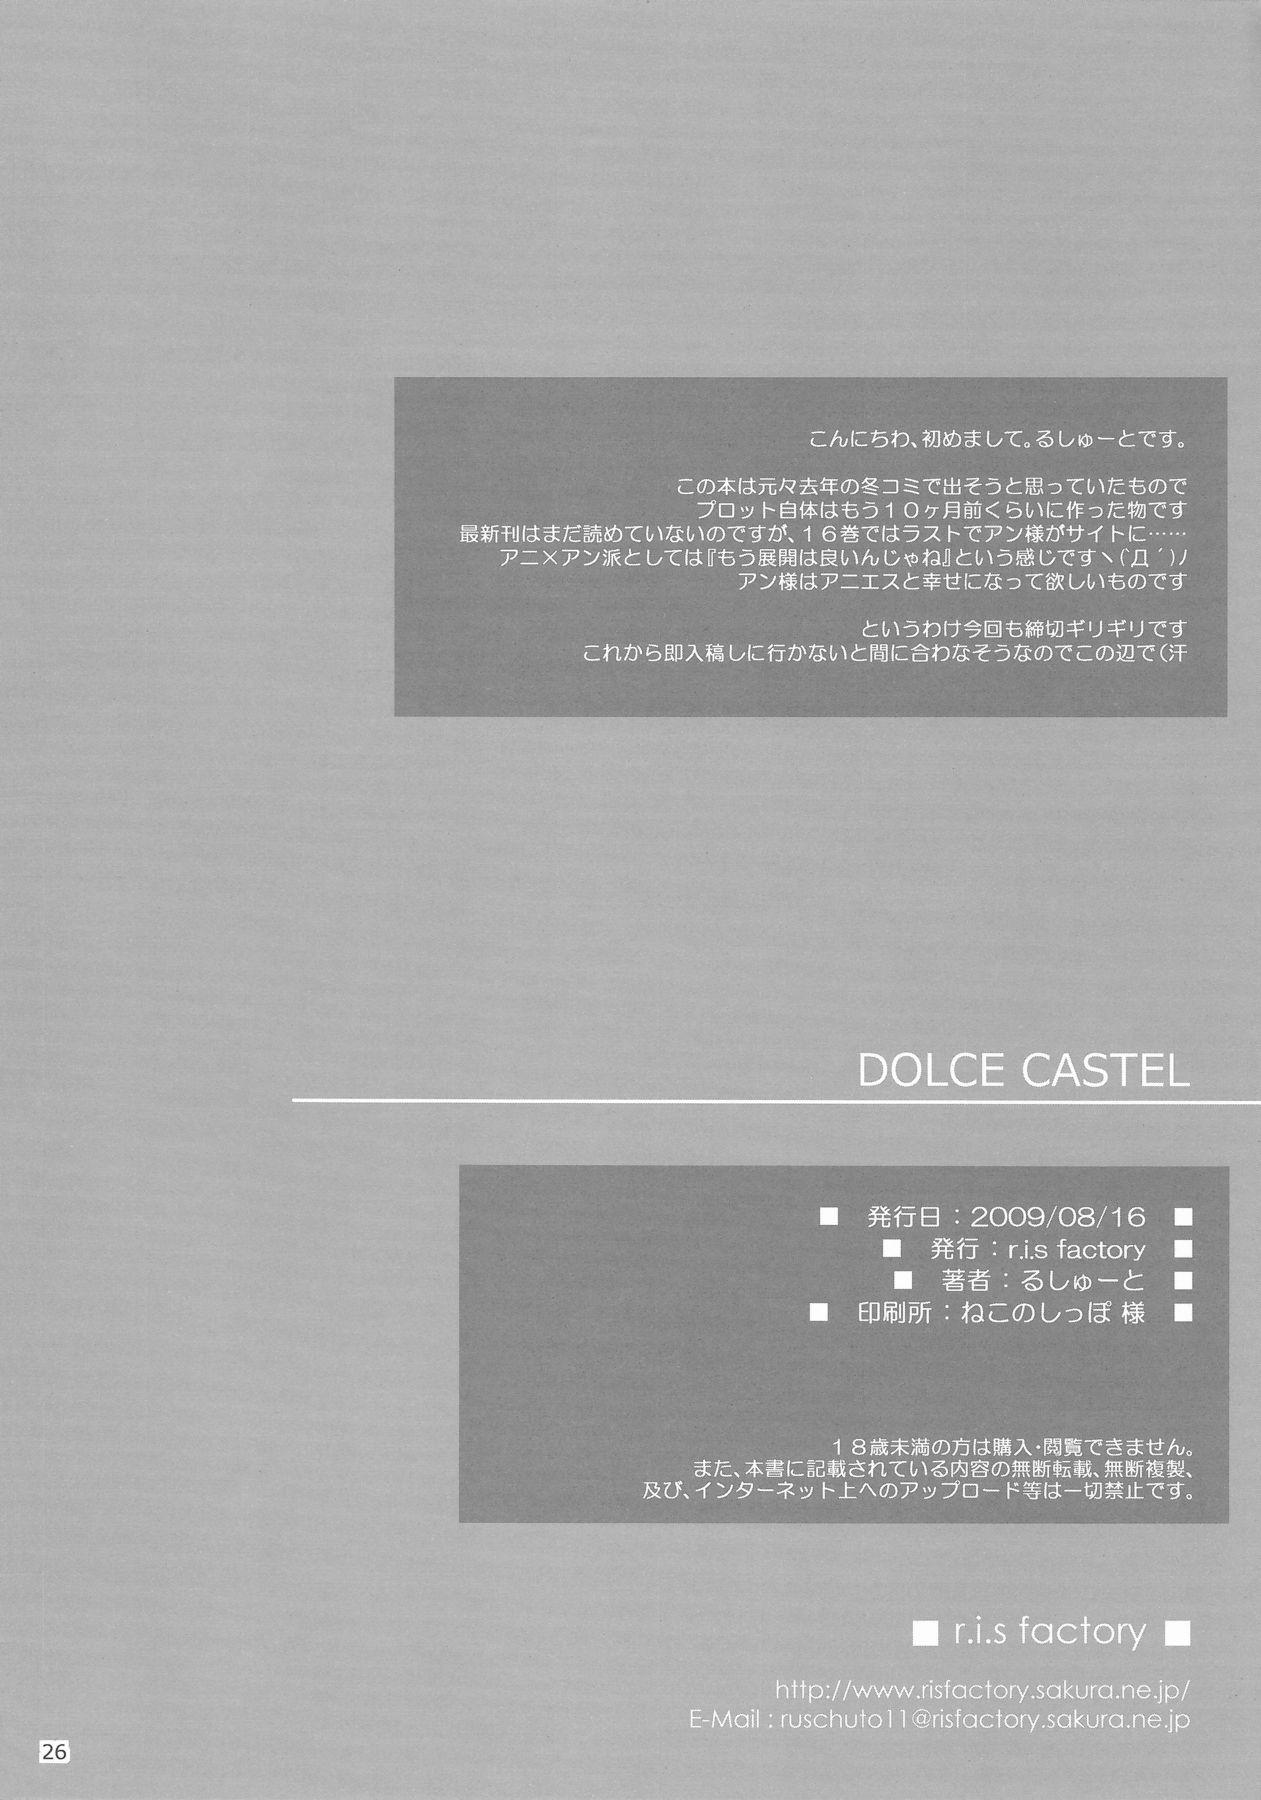 Satin DOLCE CASTEL - Zero no tsukaima Sofa - Page 26